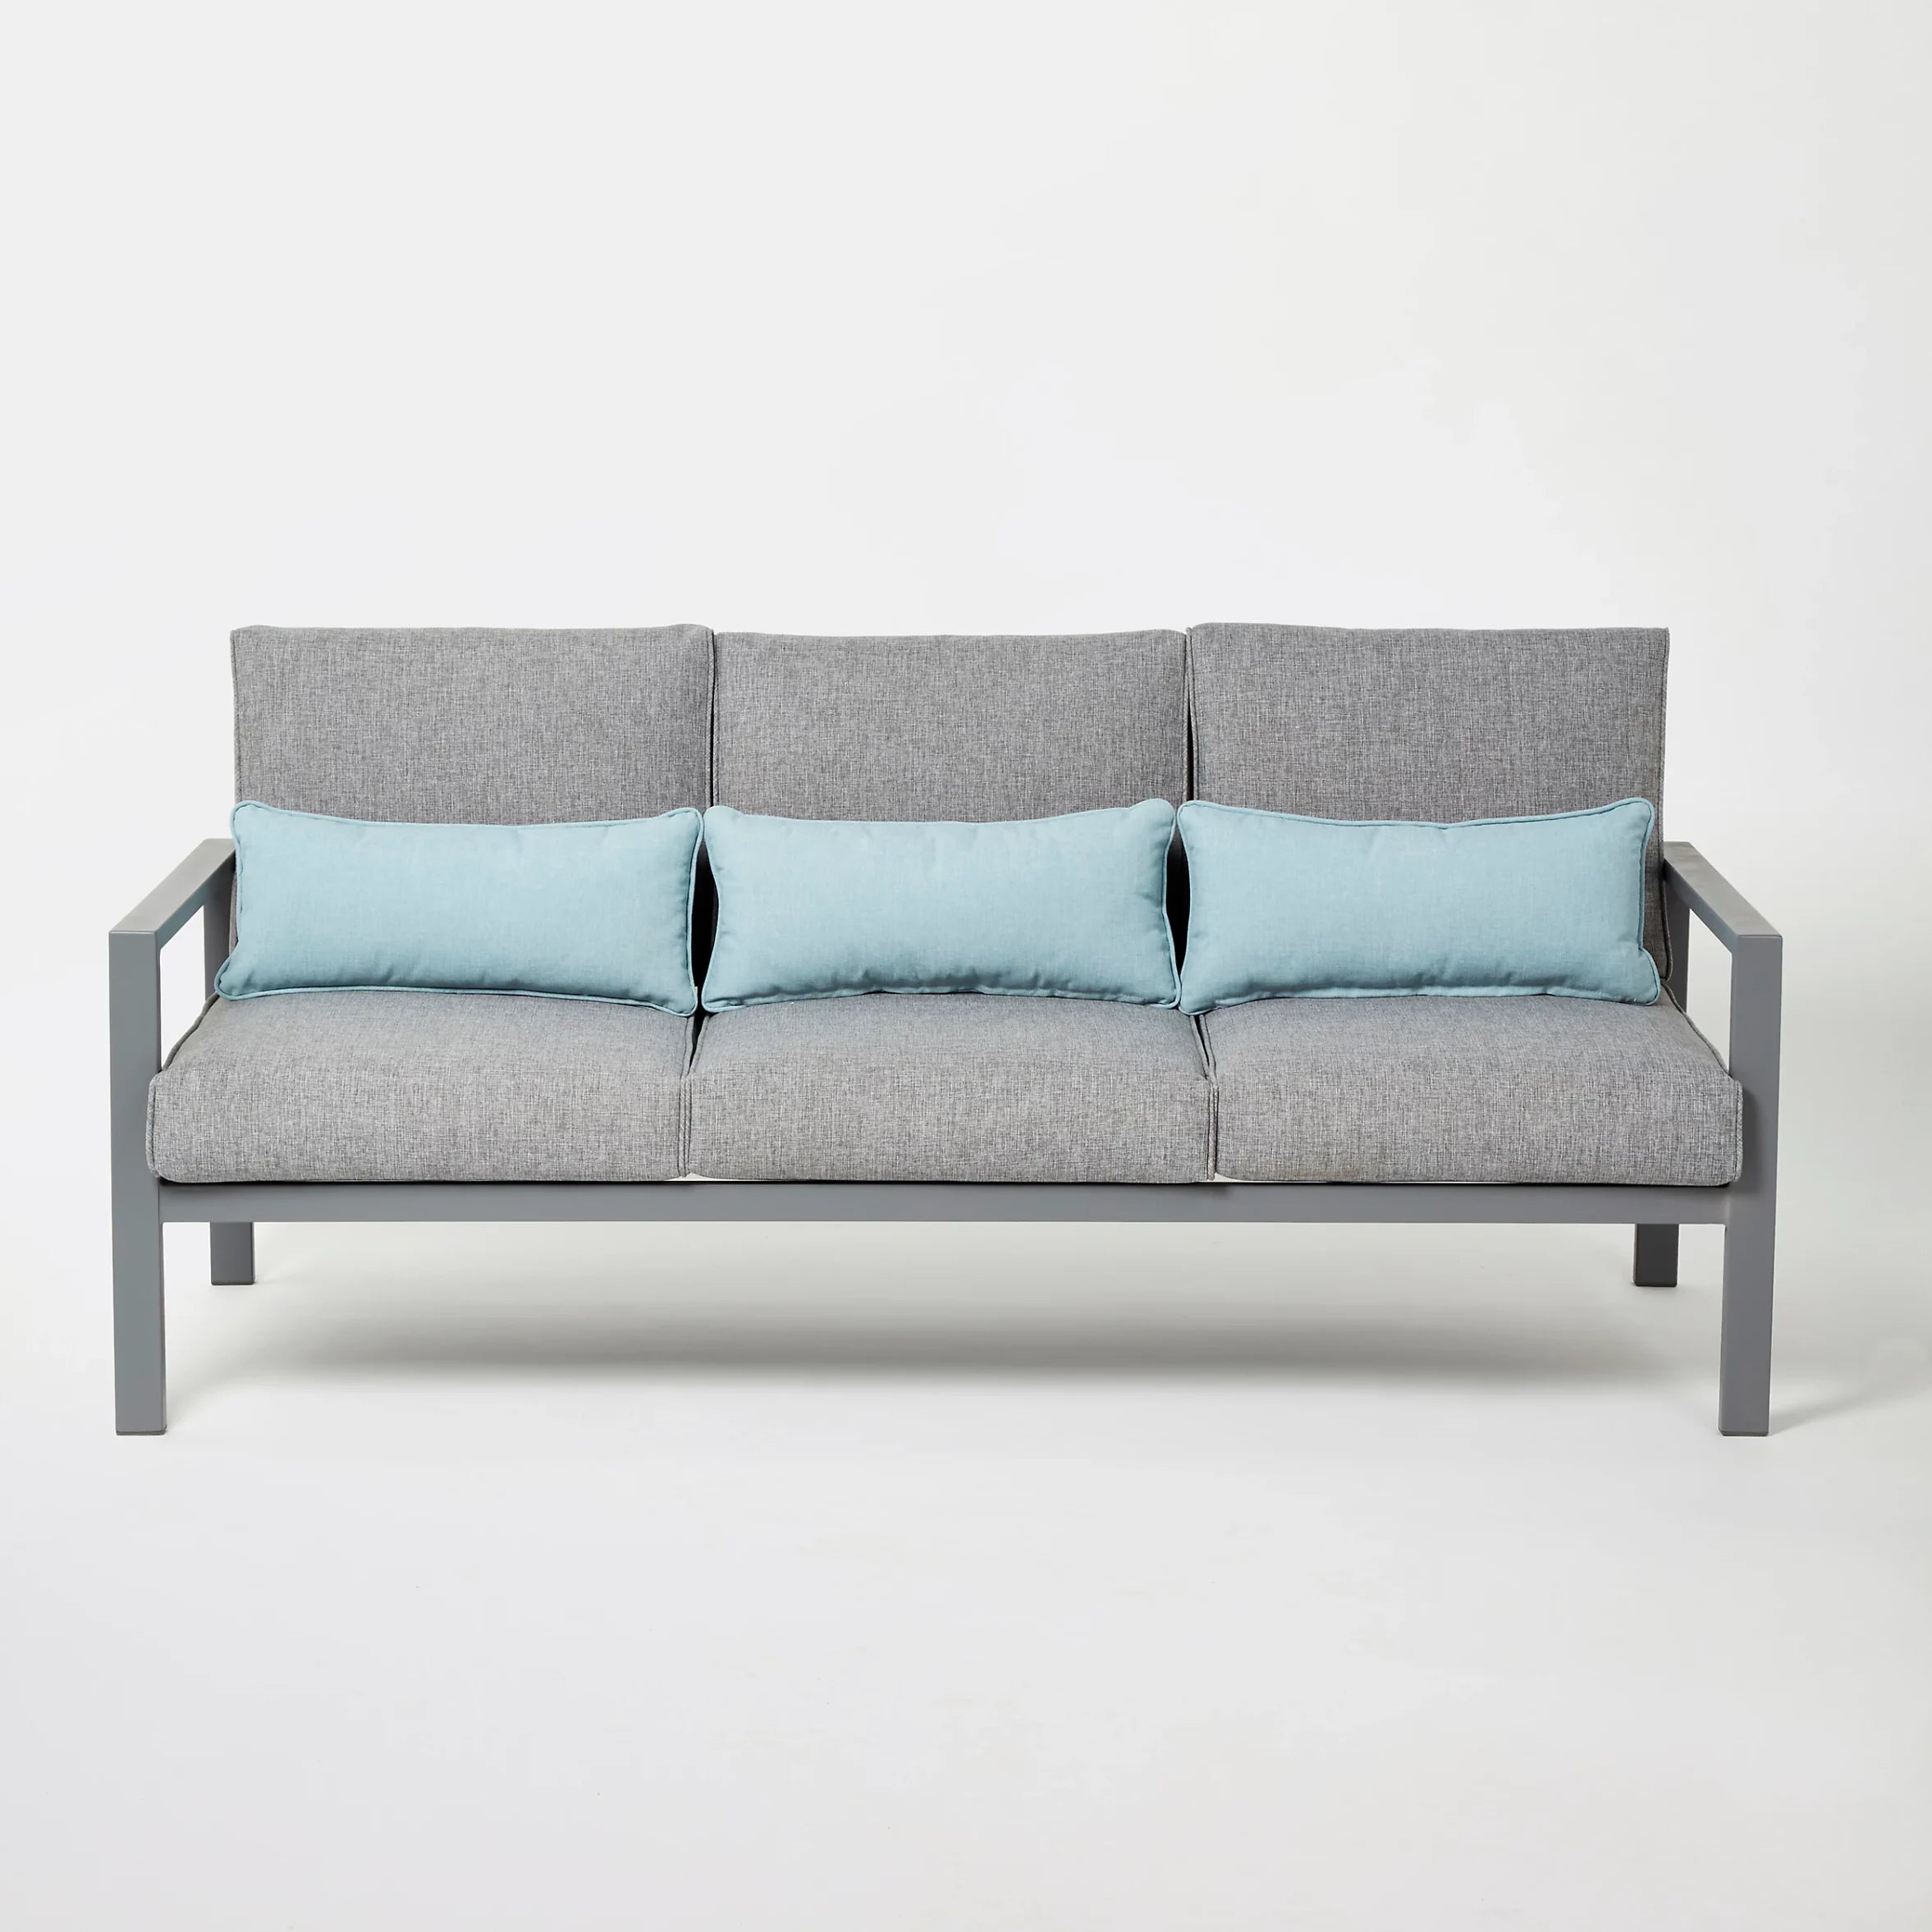 GoodHome Nymark Metal 5 seater Coffee set Grey- Garden Furniture - Similar to the Moorea Range - 0209